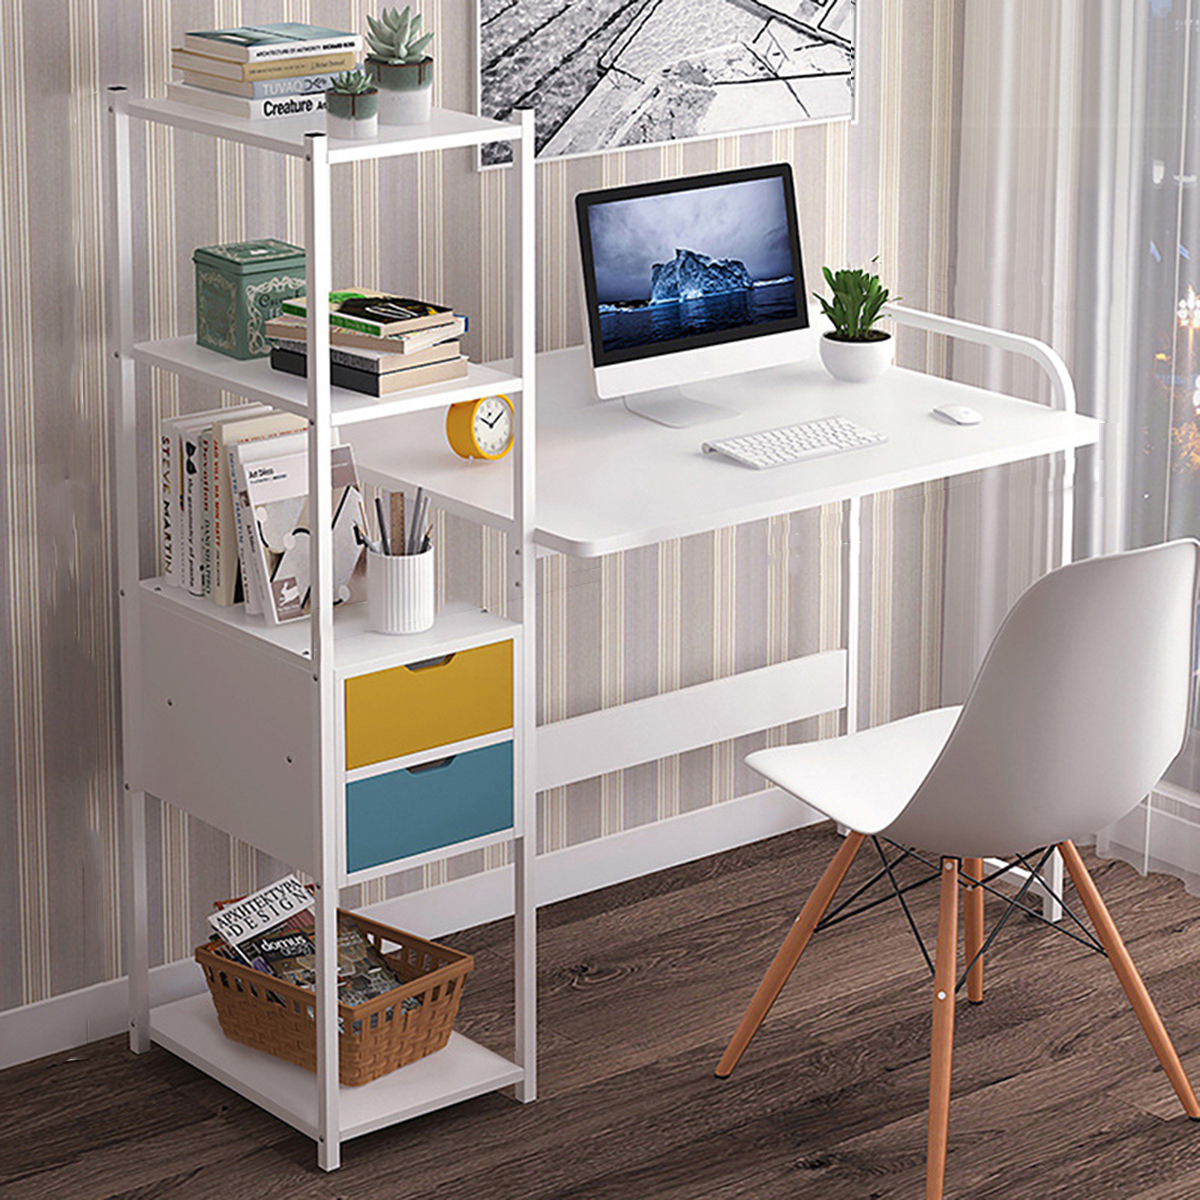 Computer-Laptop-Desk-Writing-Study-Table-Bookshelf-Desktop-Workstation-with-Storage-Shelf-Drawers-Ho-1747684-13